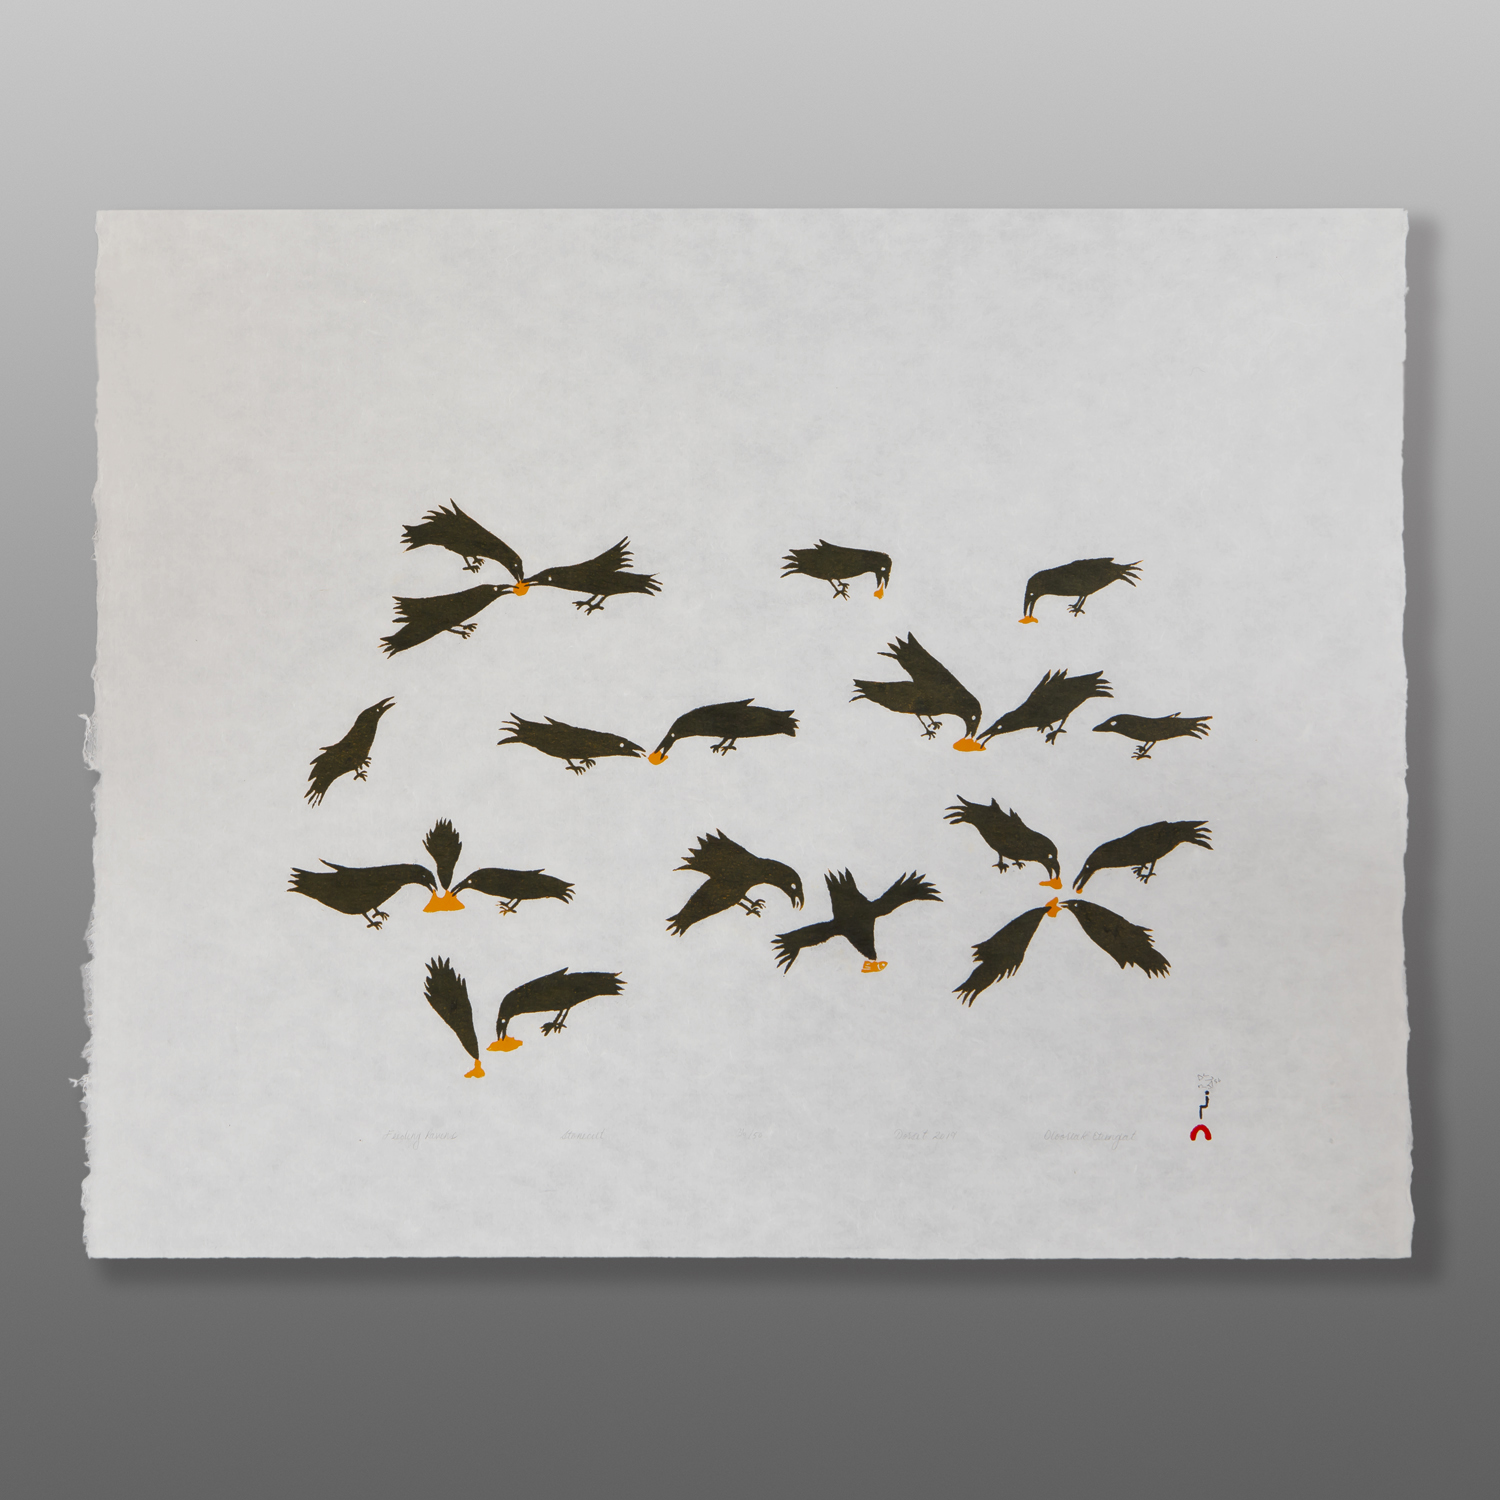 Feeding Ravens
OLOOREAK ETUNGAT
InuitStonecut
Paper: Kizuki Kozo White
Printer: Cee Pootoogook
19” x 24 ¼”
$ 500
$400Arctic Bird Show 2024
